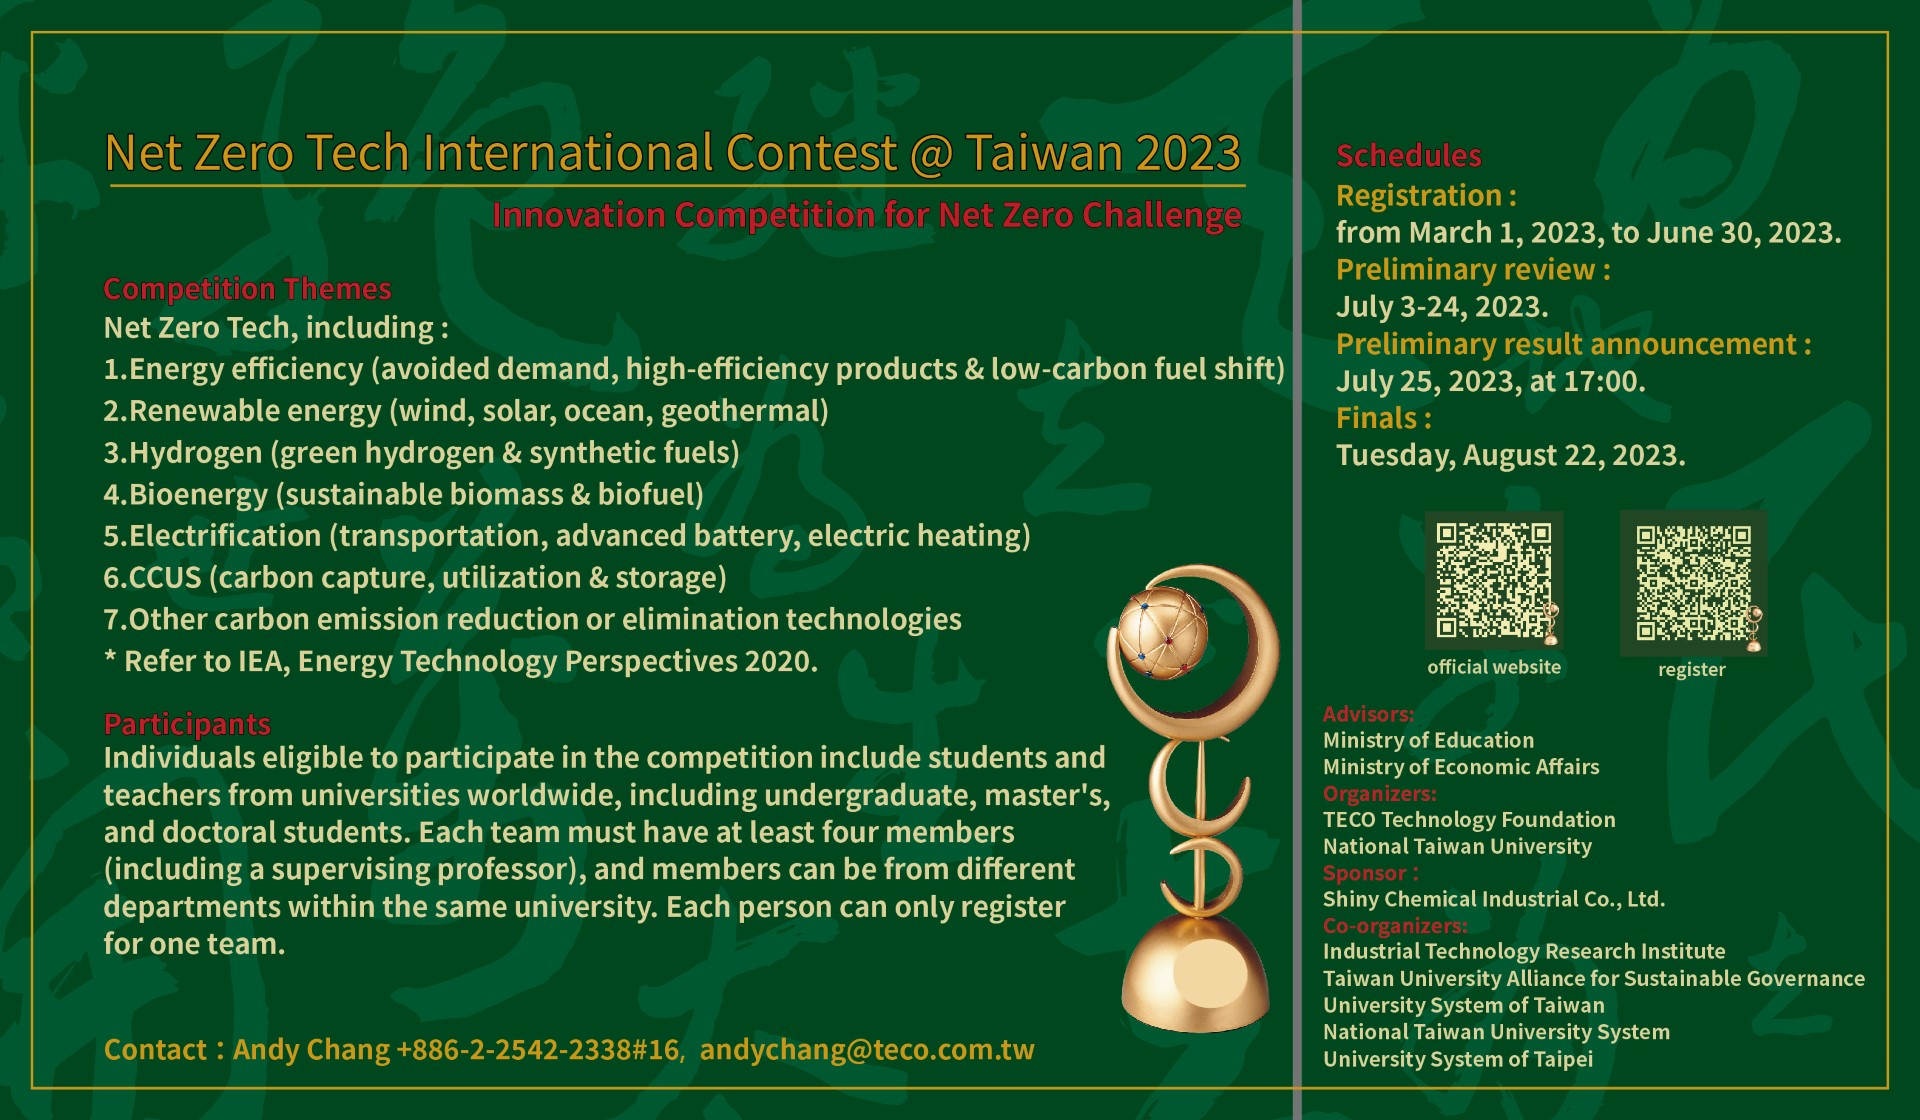 Net Zero Tech International Contest at Taiwan 2023